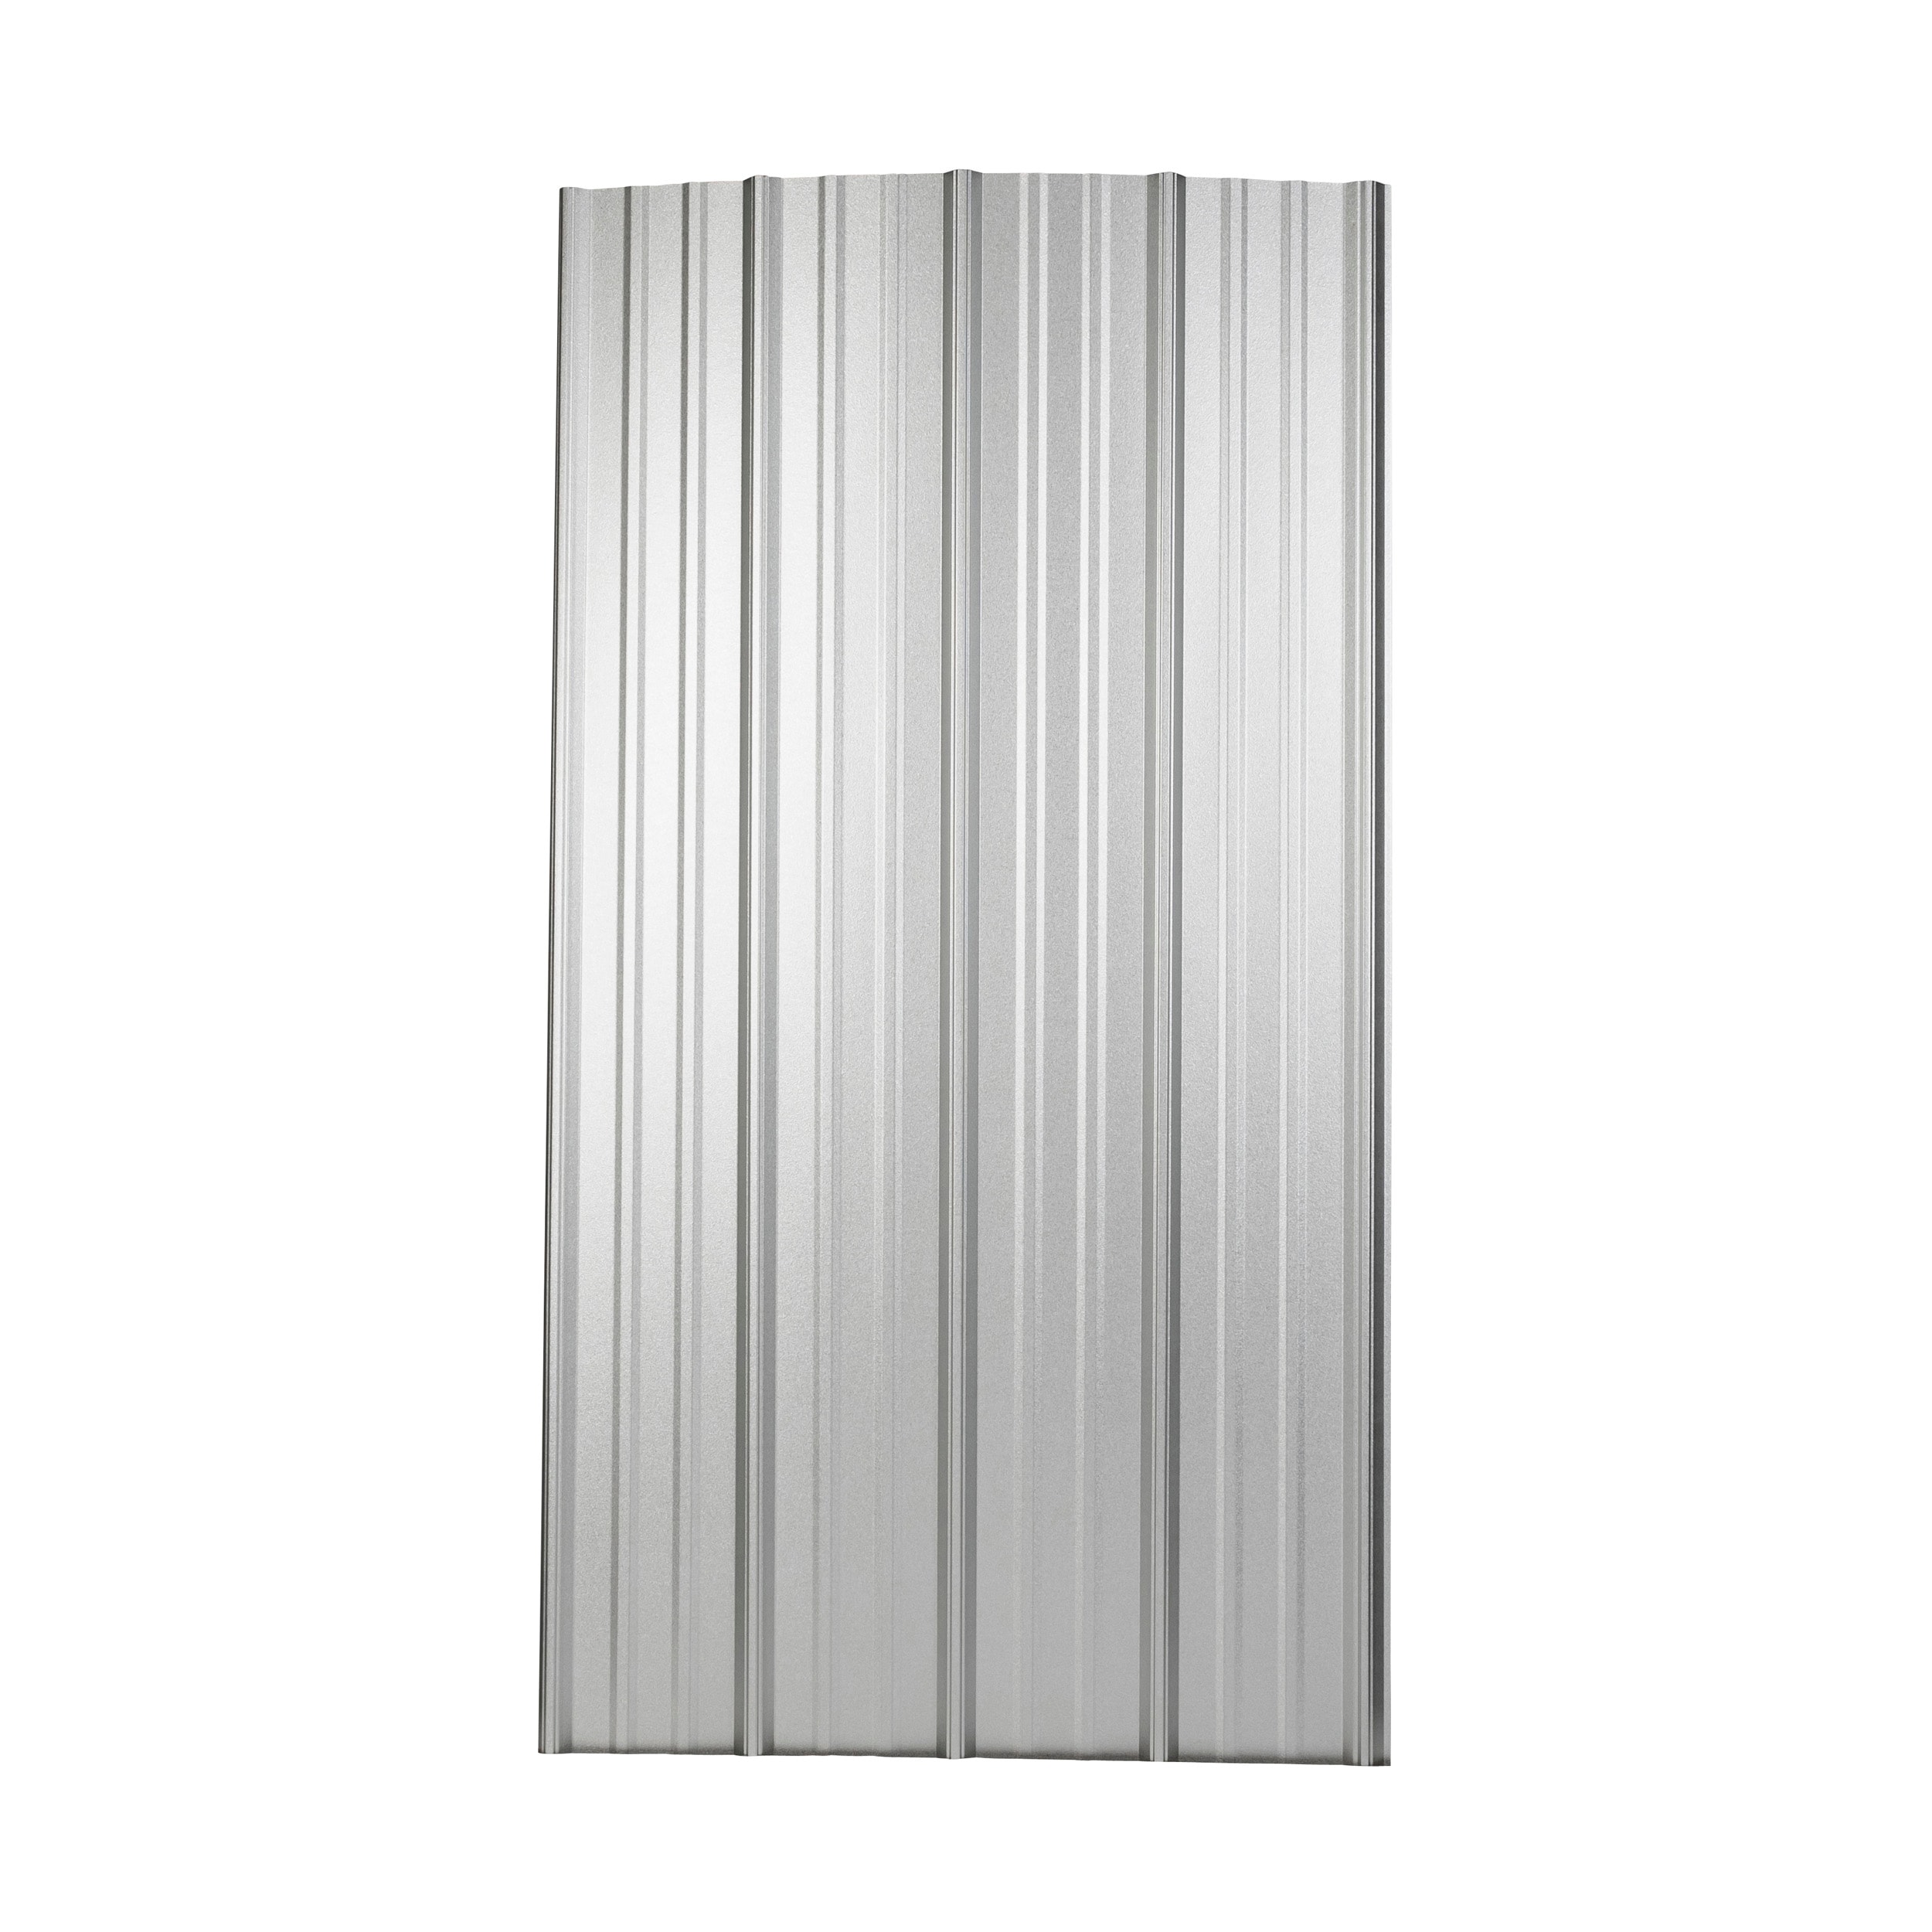 1 1/4 Corrugated Metal Panels for Interior & Exterior